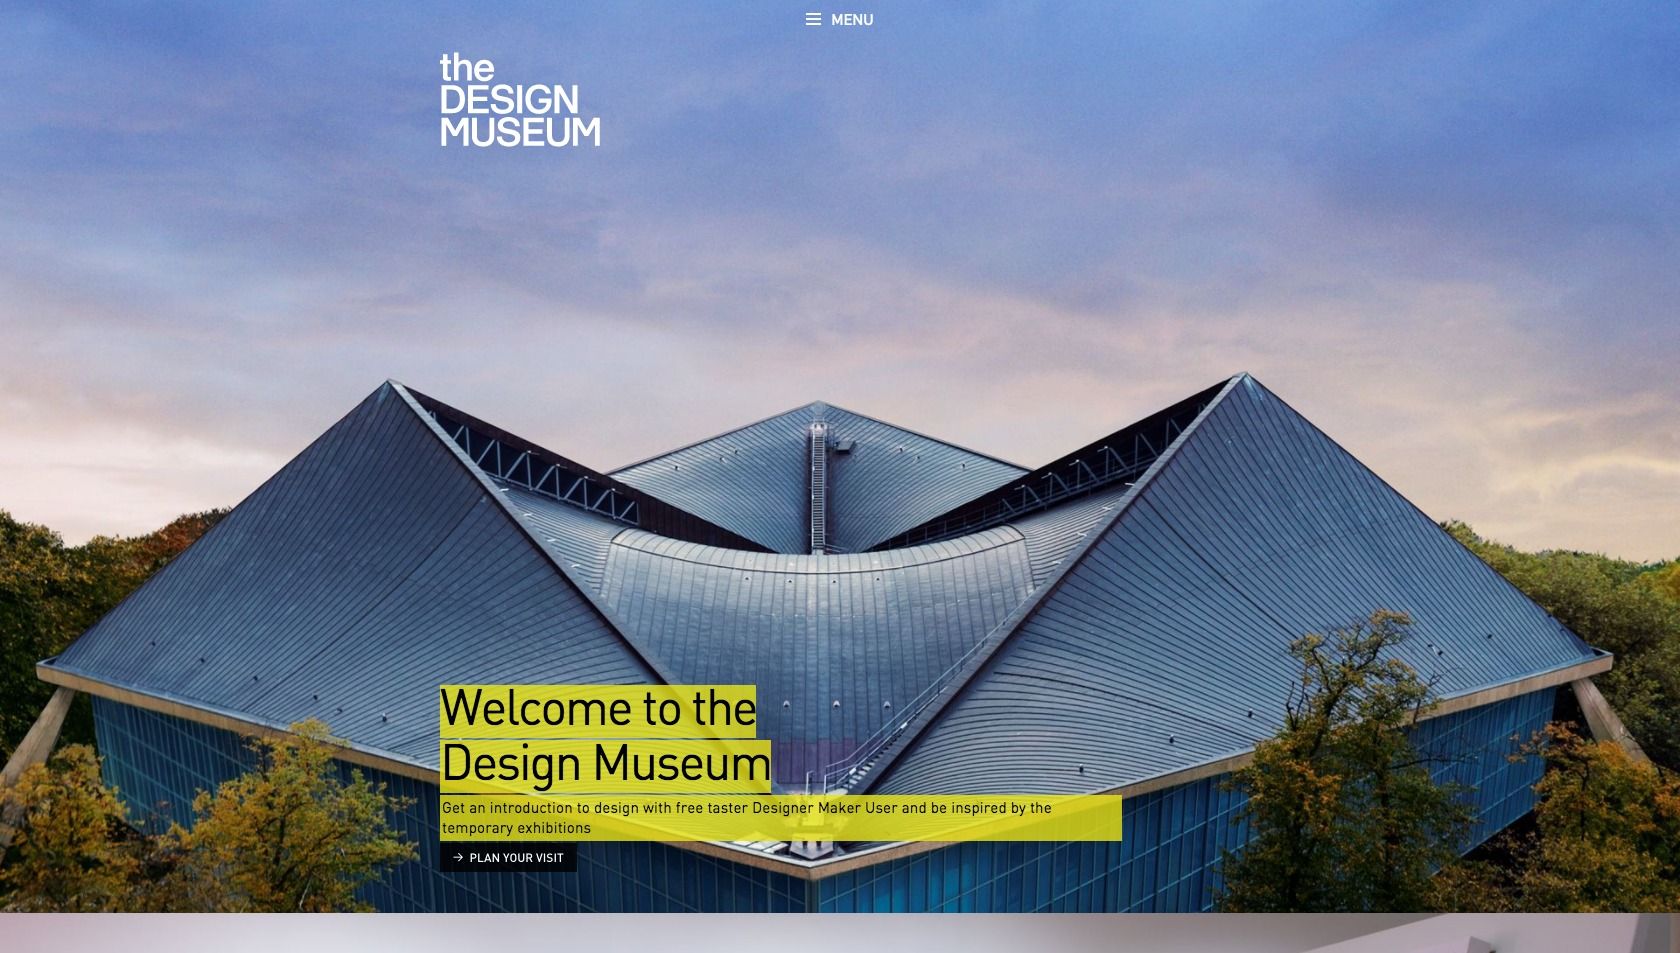 The new Design Museum